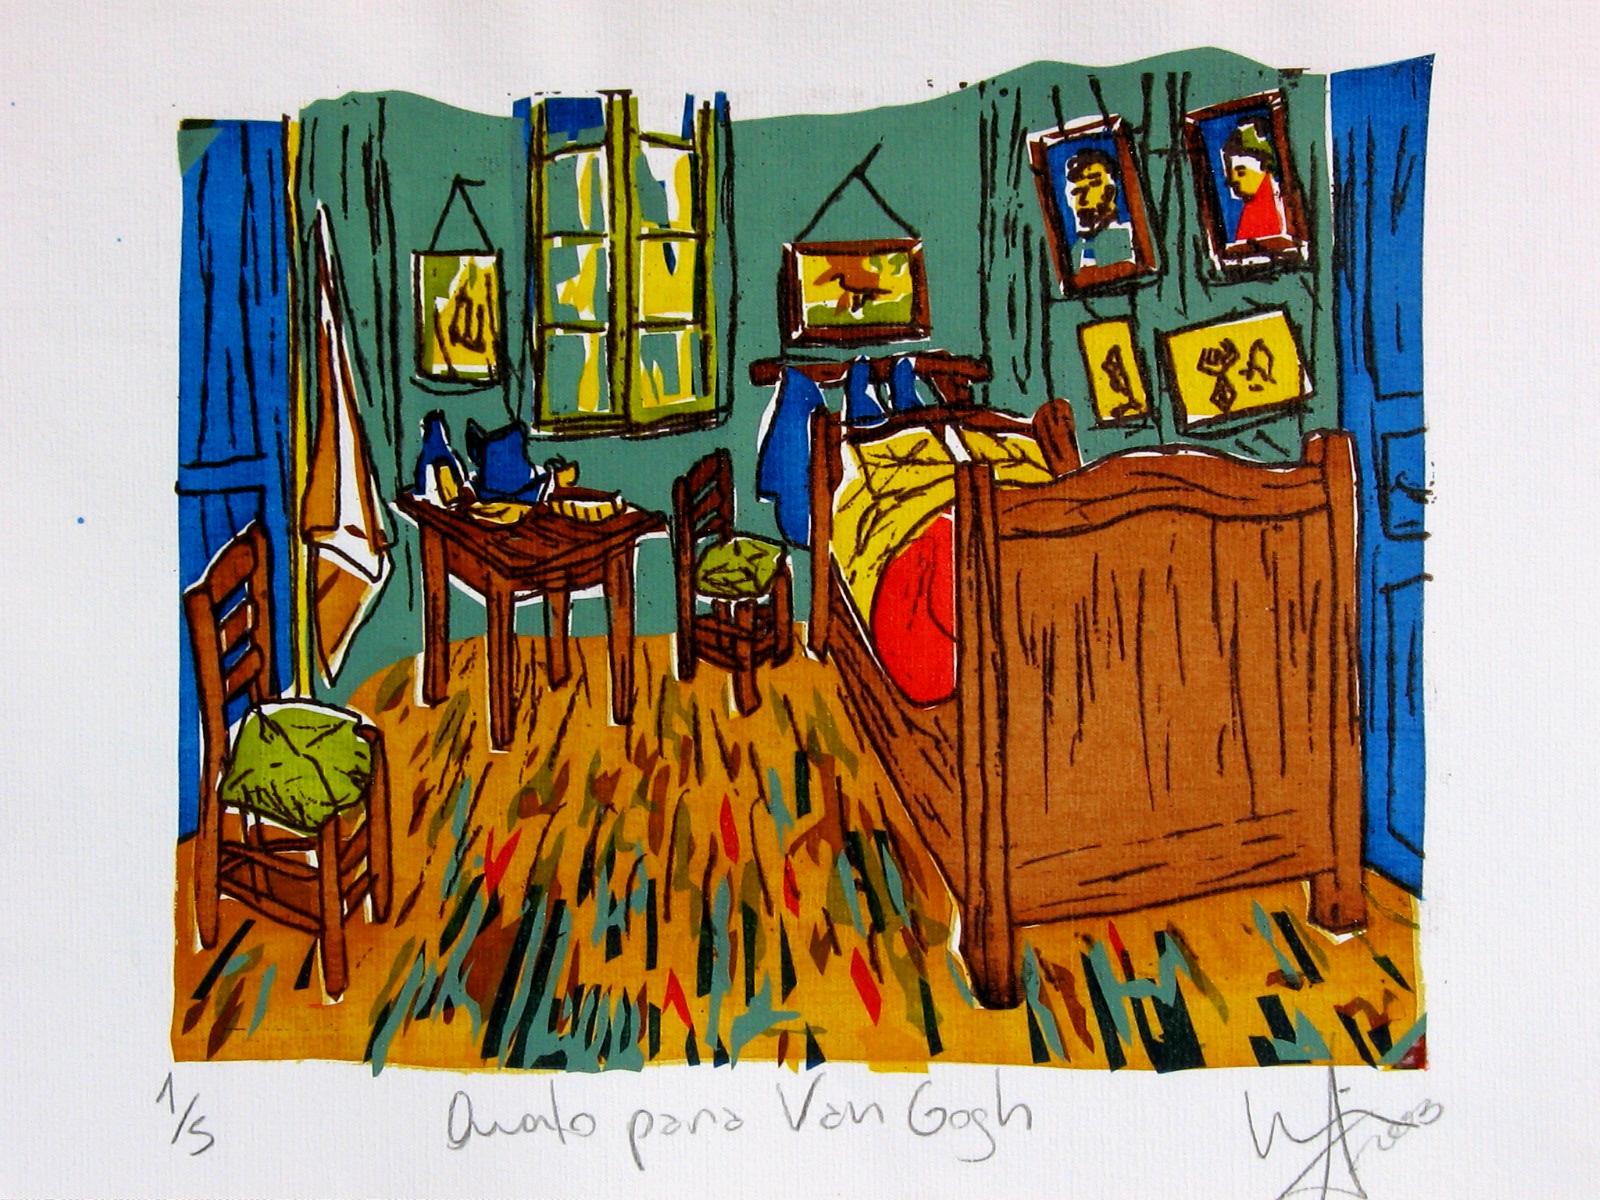 [2003+Quarto+para+Van+Gogh.JPG]